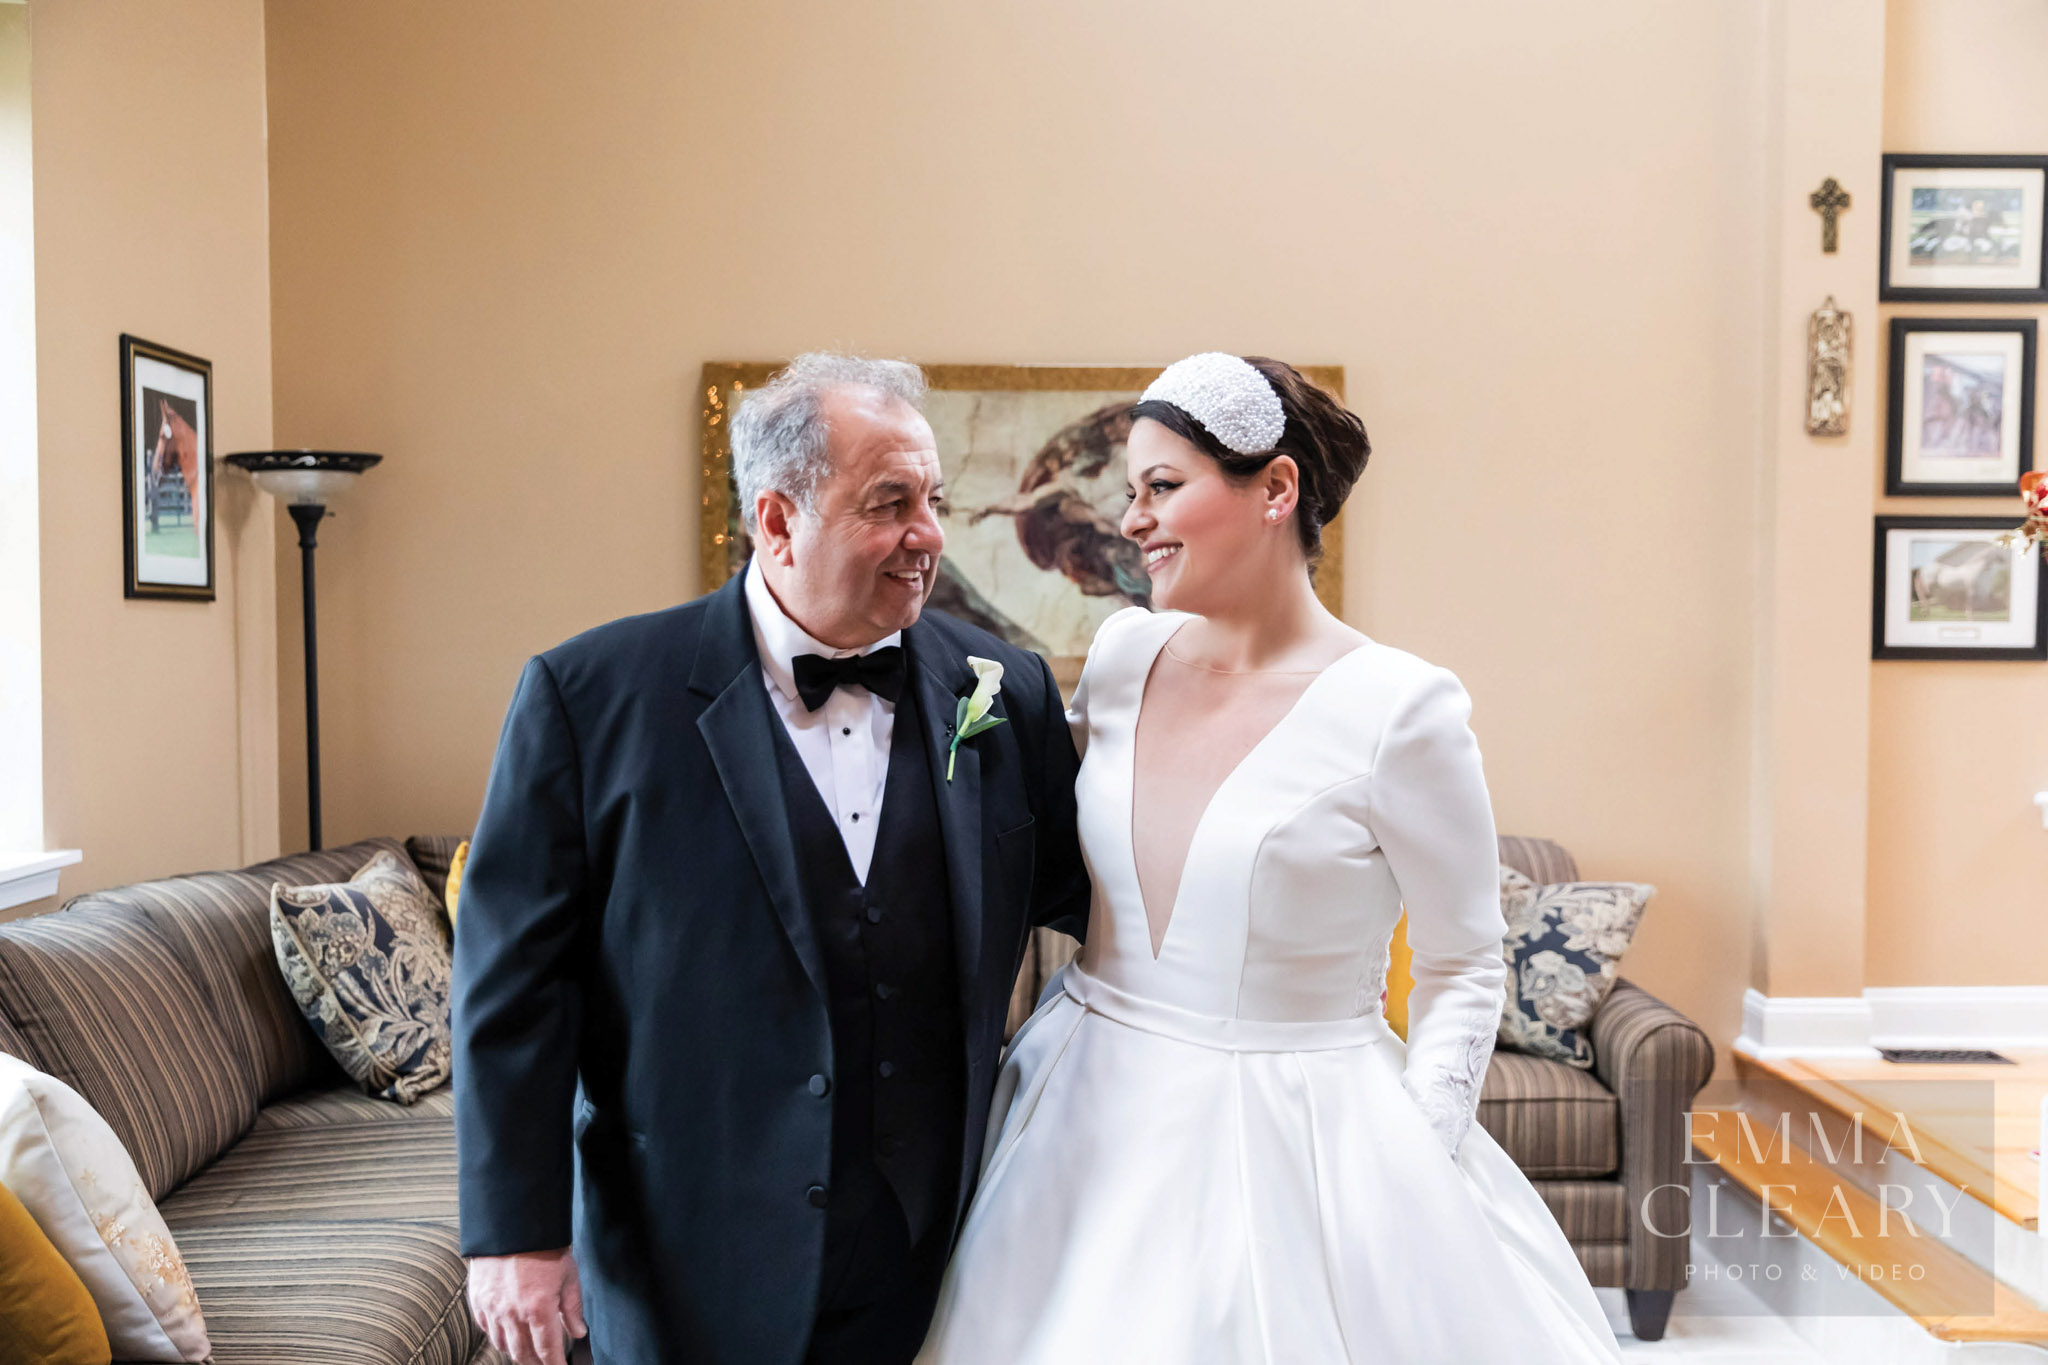 Dad and the bride